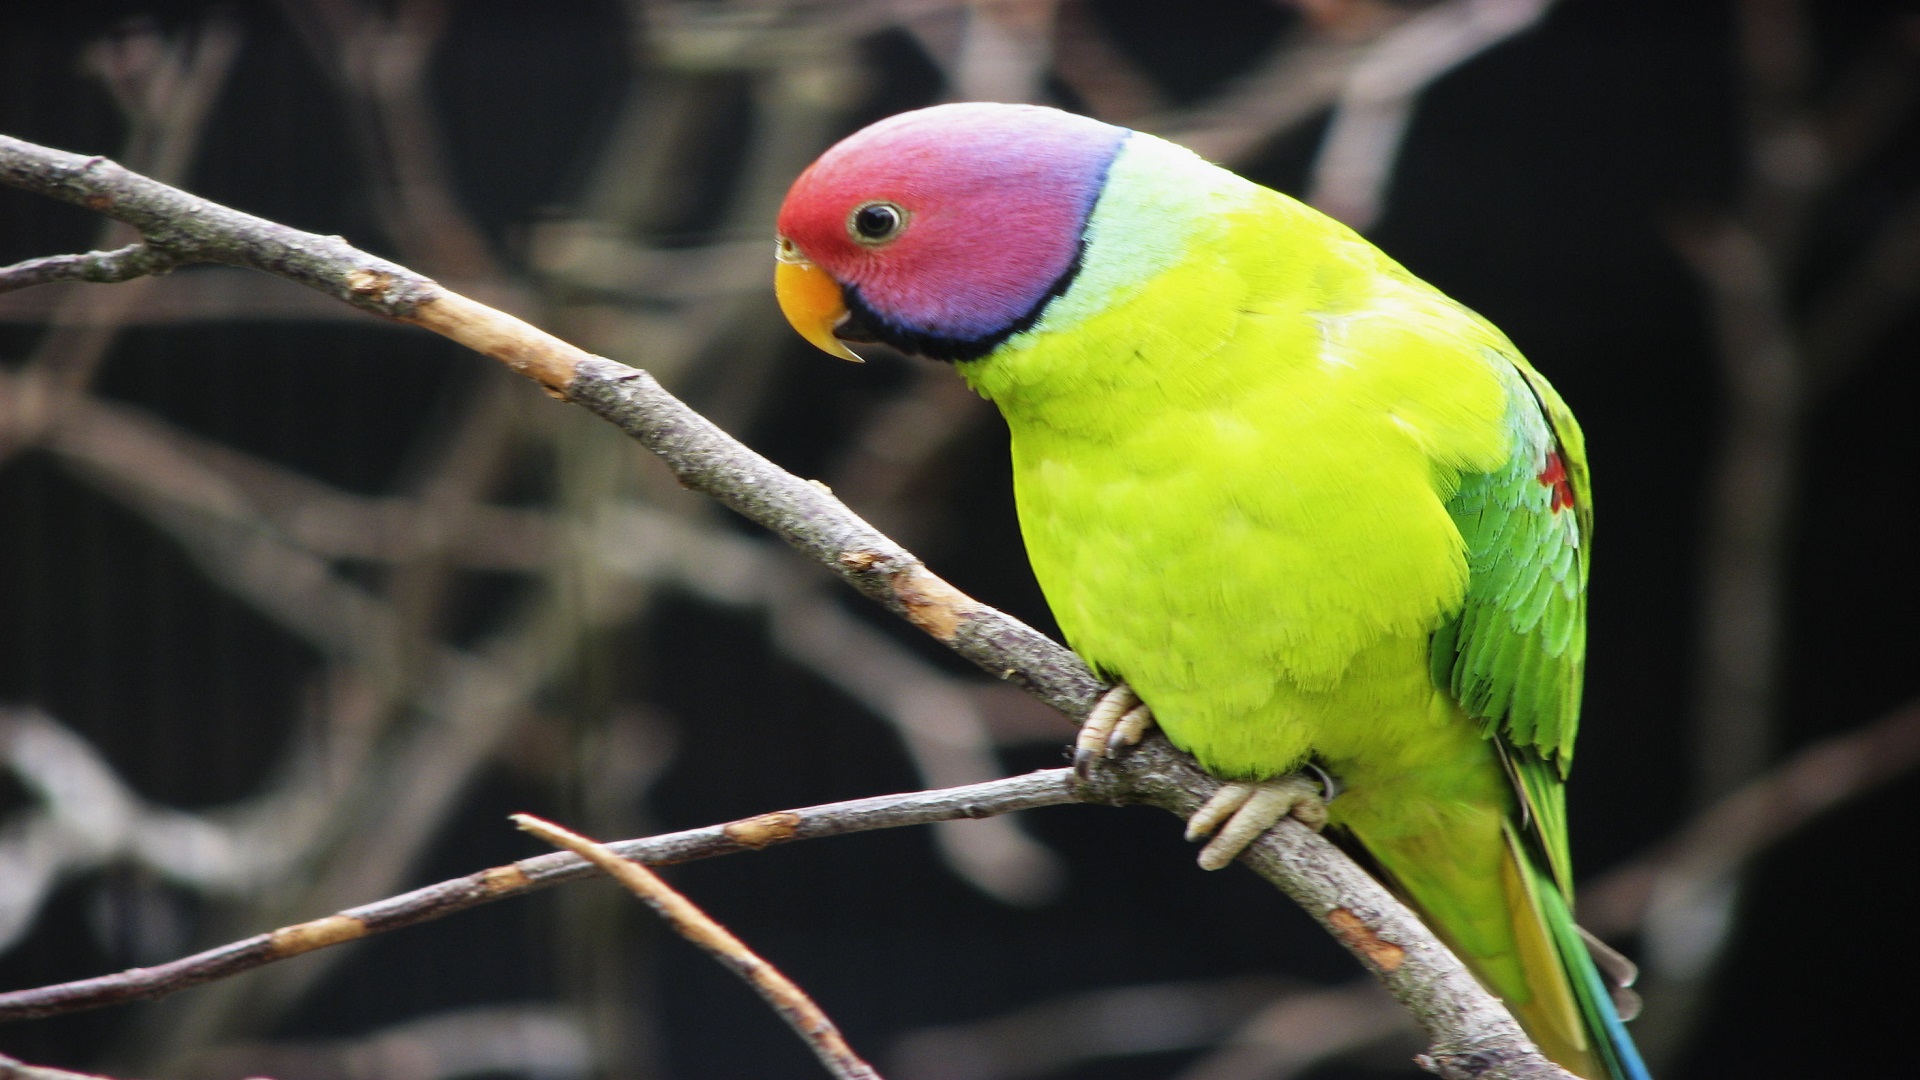 hd birds wallpapers download,bird,vertebrate,parakeet,parrot,beak